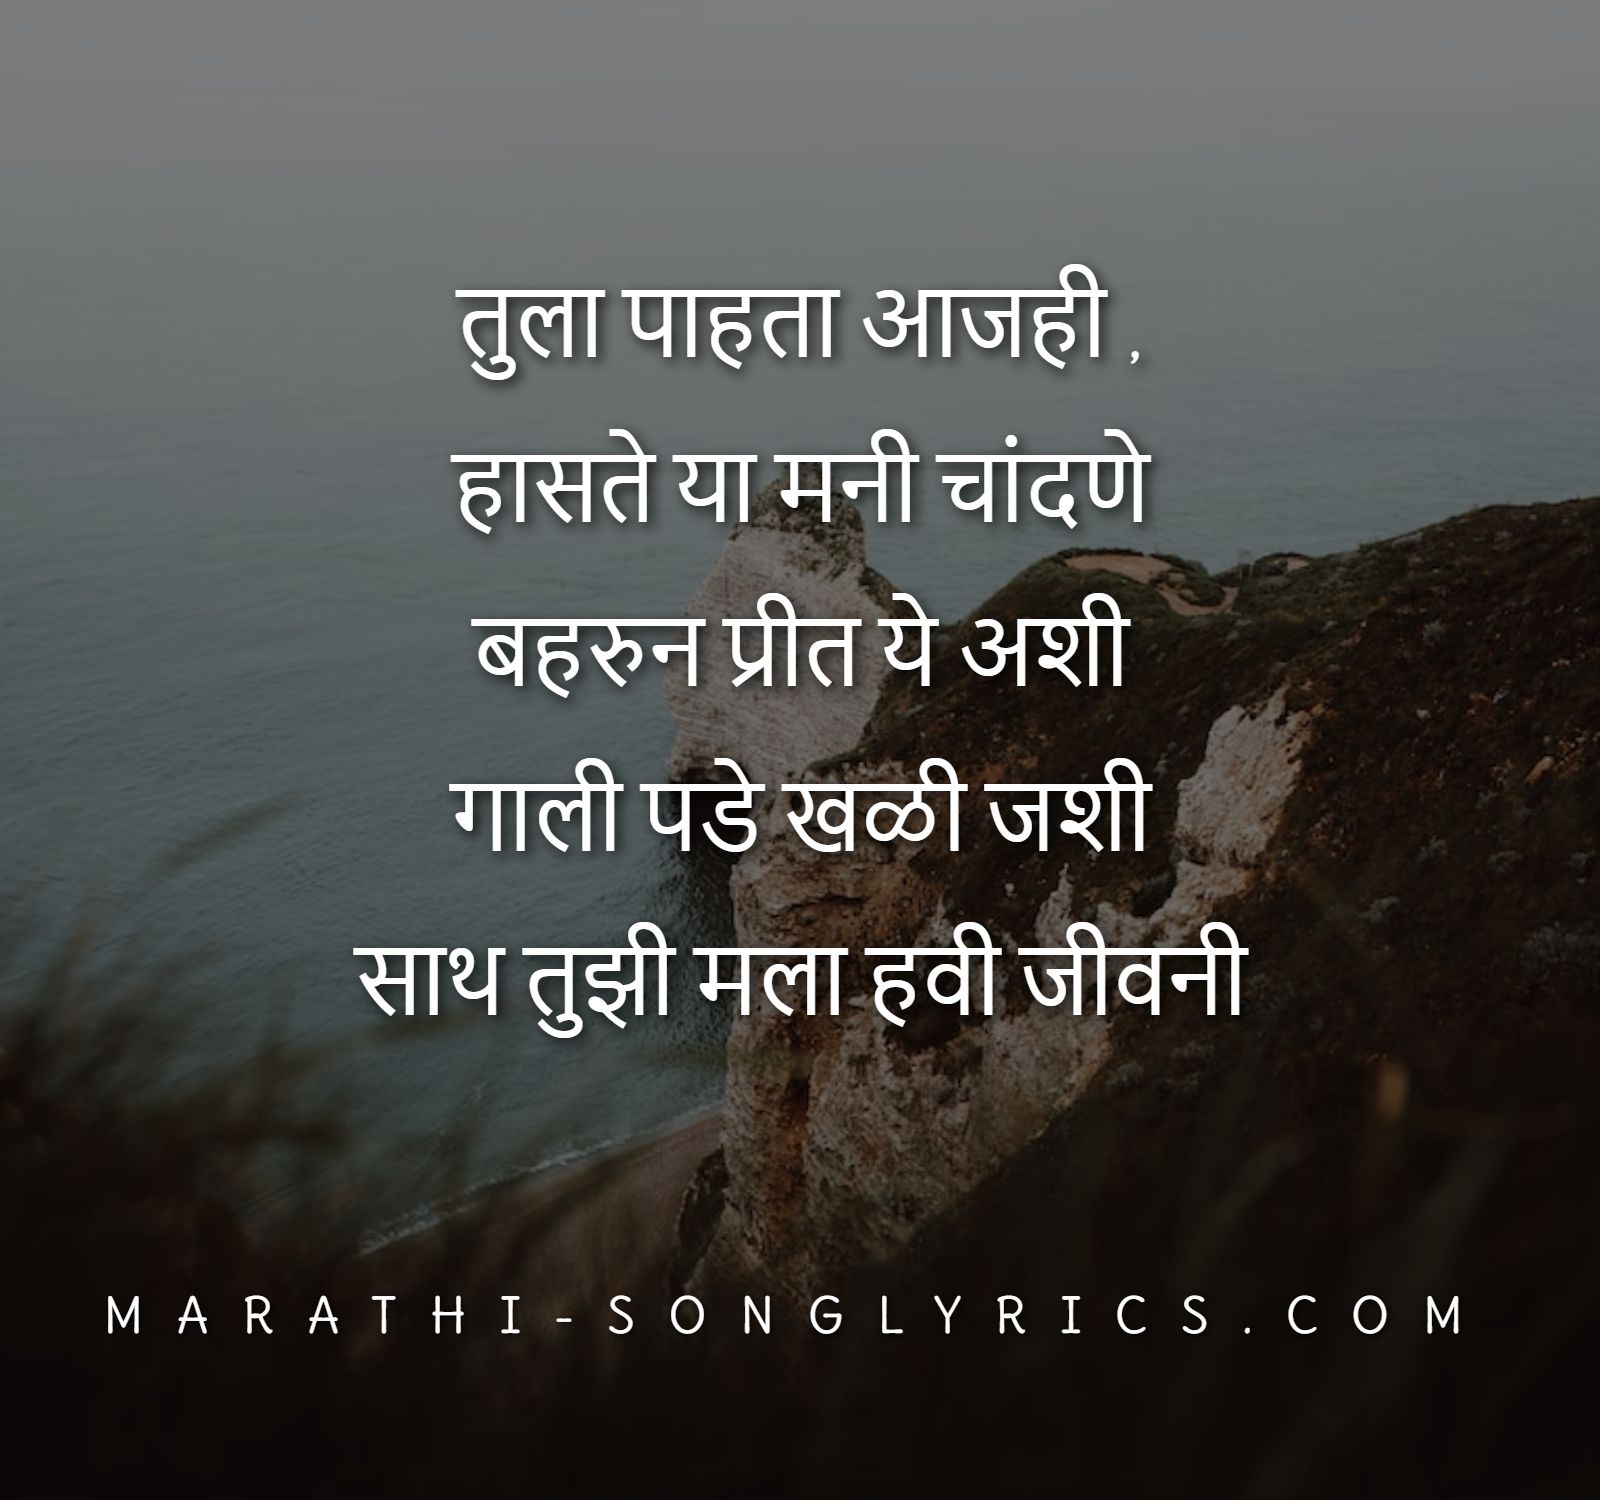 Tula Pahata Lyrics in Marathi |तुला पाहता lyrics